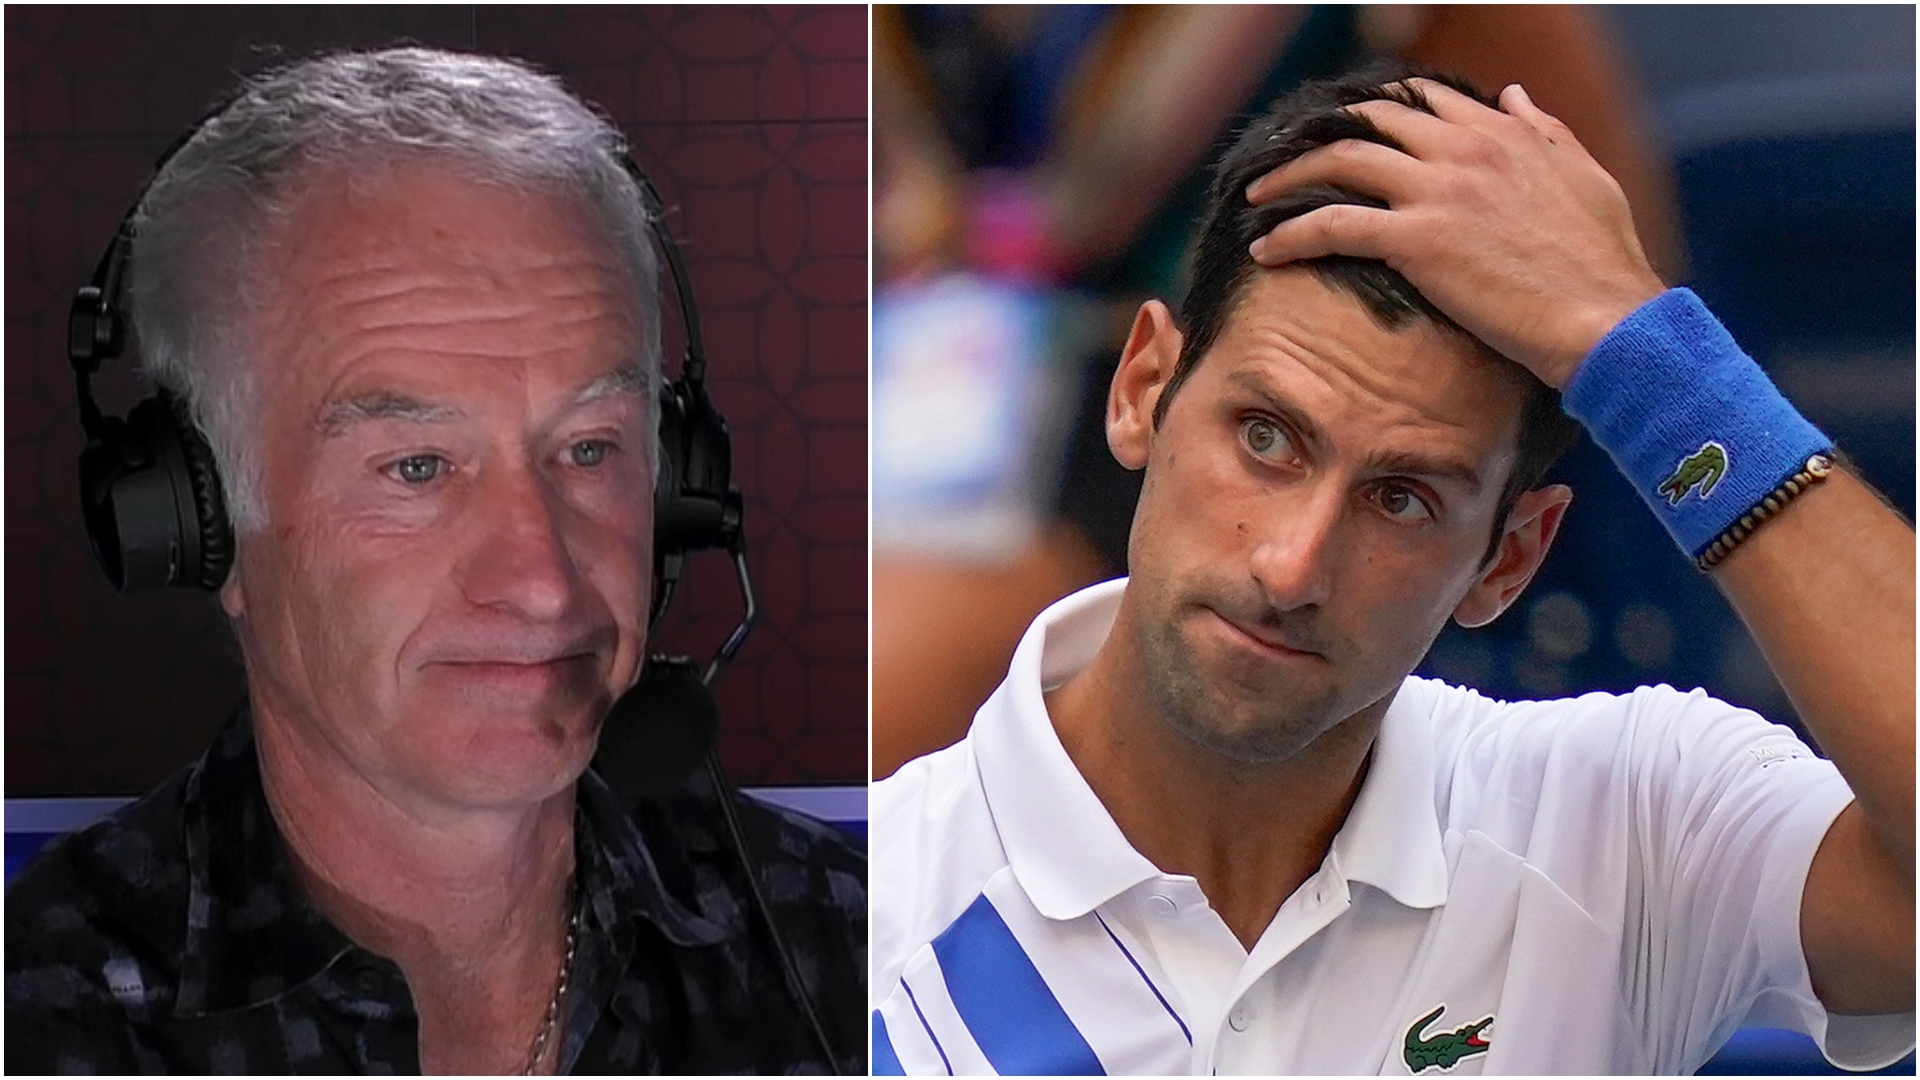 McEnroe calls Djokovic's gaffe 'a rookie mistake'